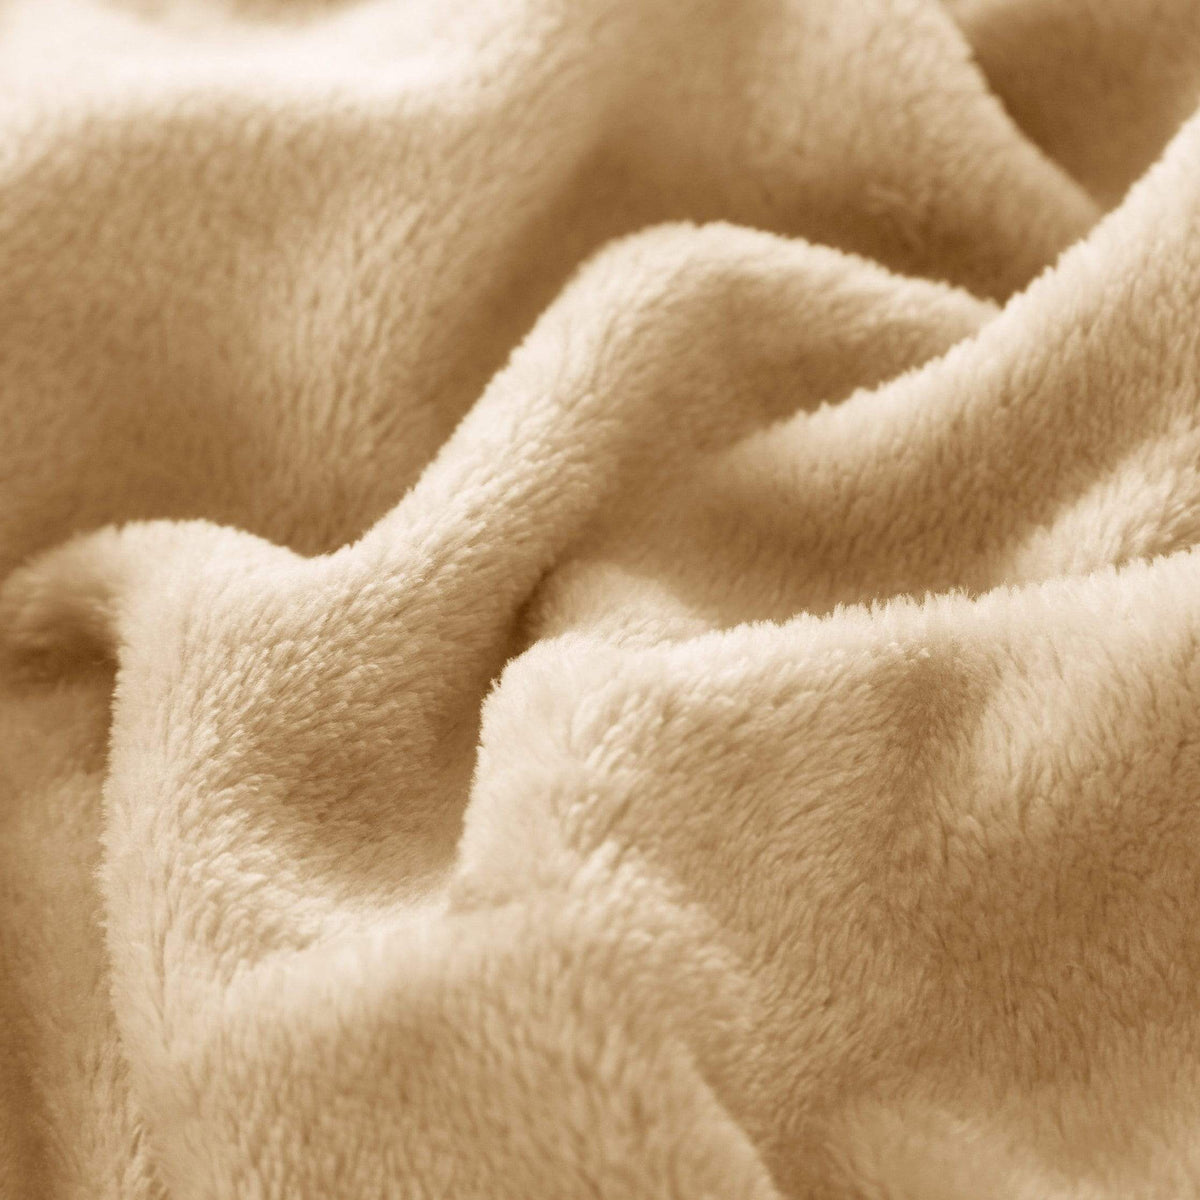 Chic Home Zahava 1 Piece Blanket Ultra Soft Fleece Microplush 